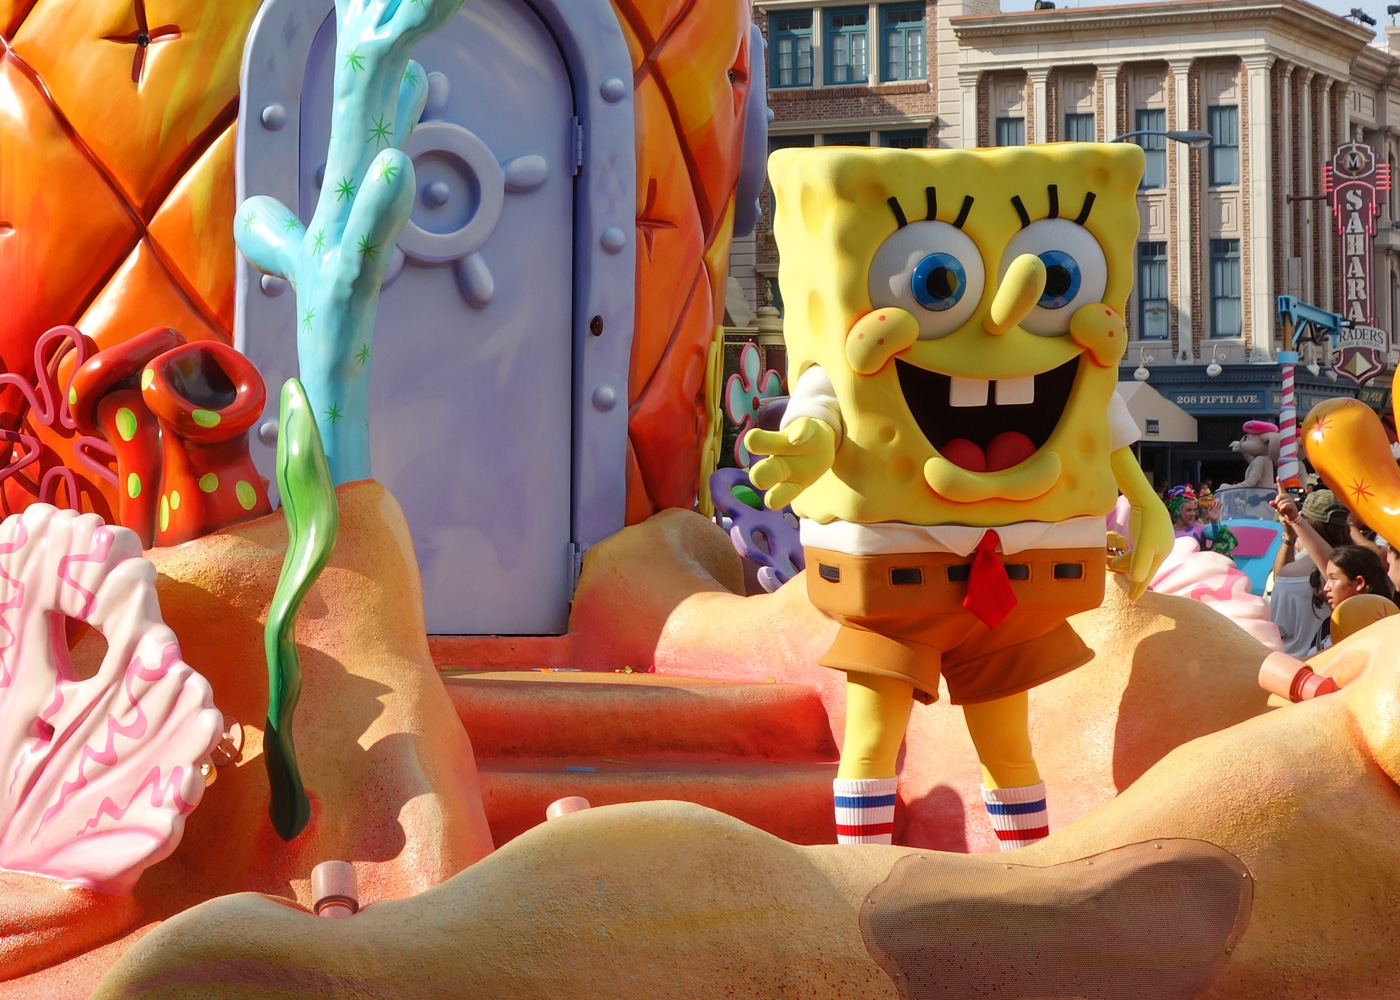 Spongebob Squarepants Universal Studios Orlando 2012 parade unit